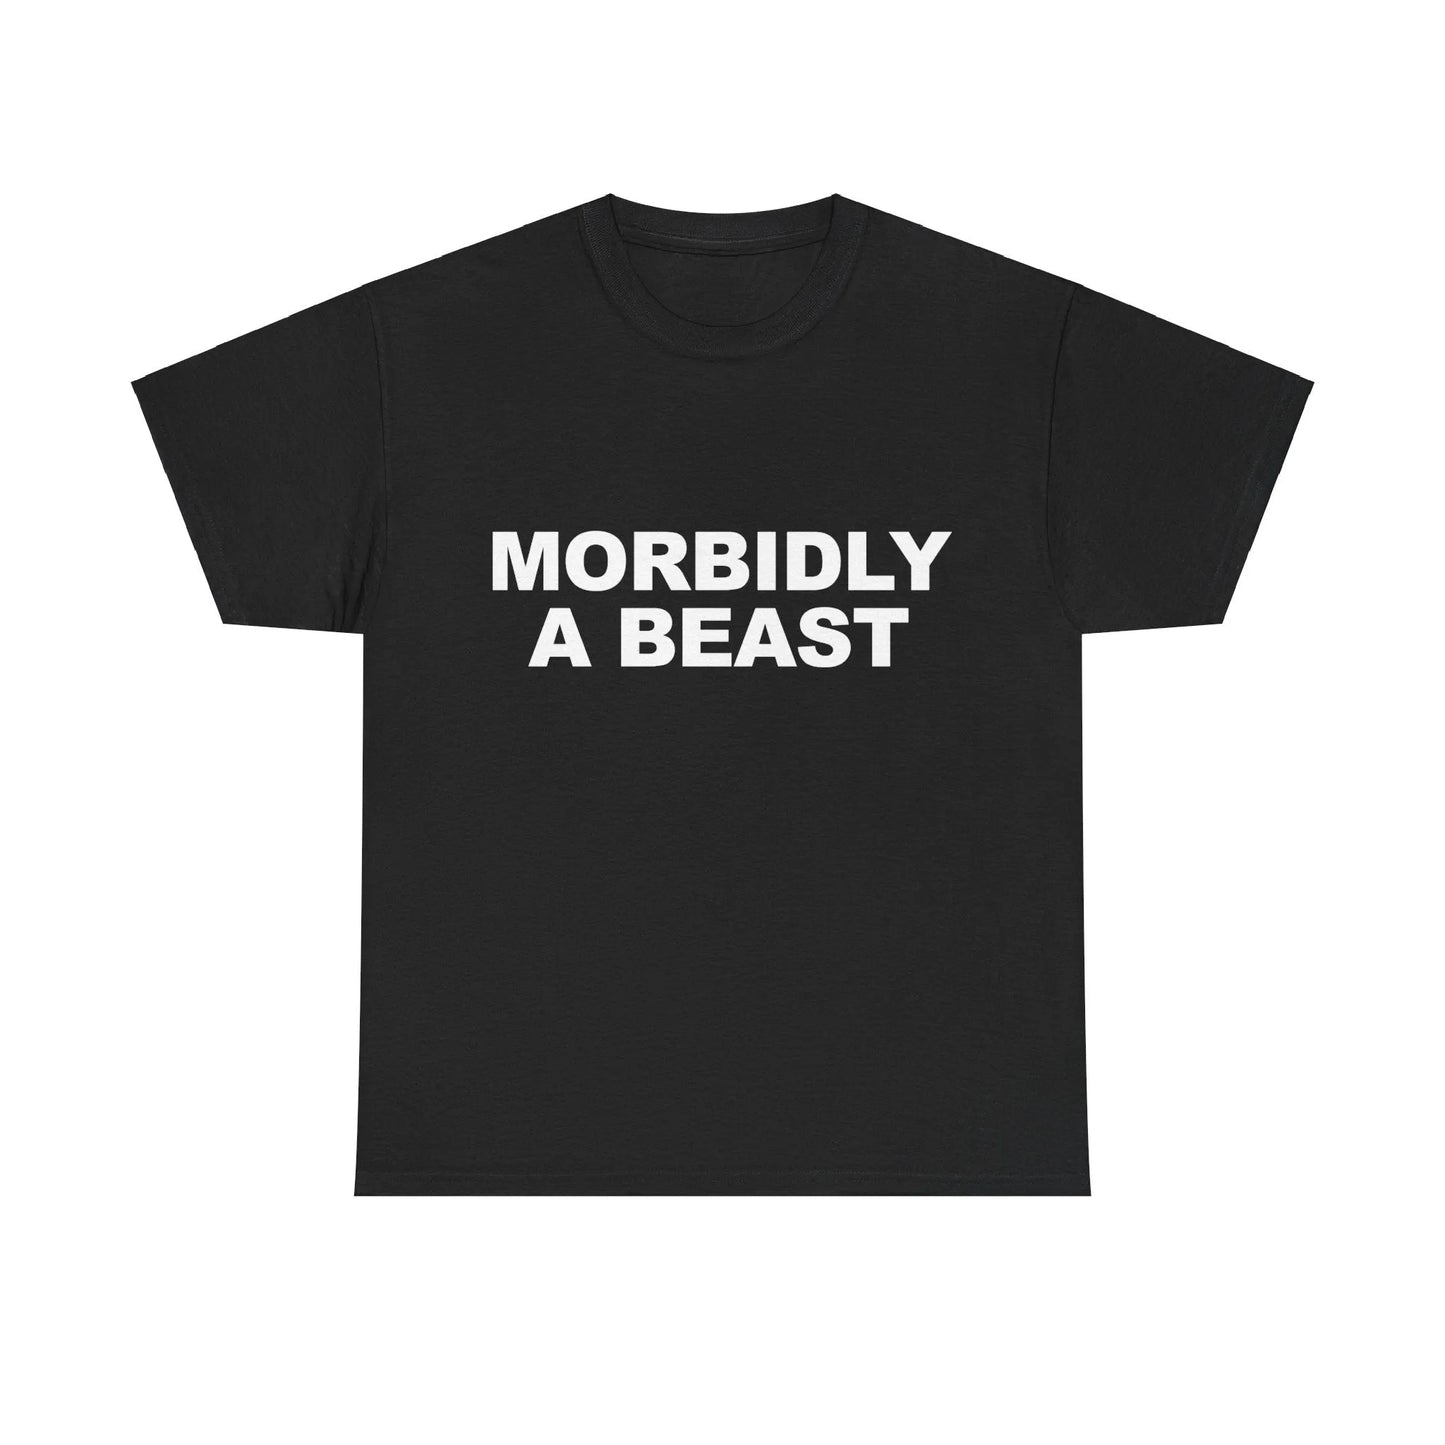 Morbidly A Beast T-Shirt - Failure International failureinternational.com store brand tiktok instagram